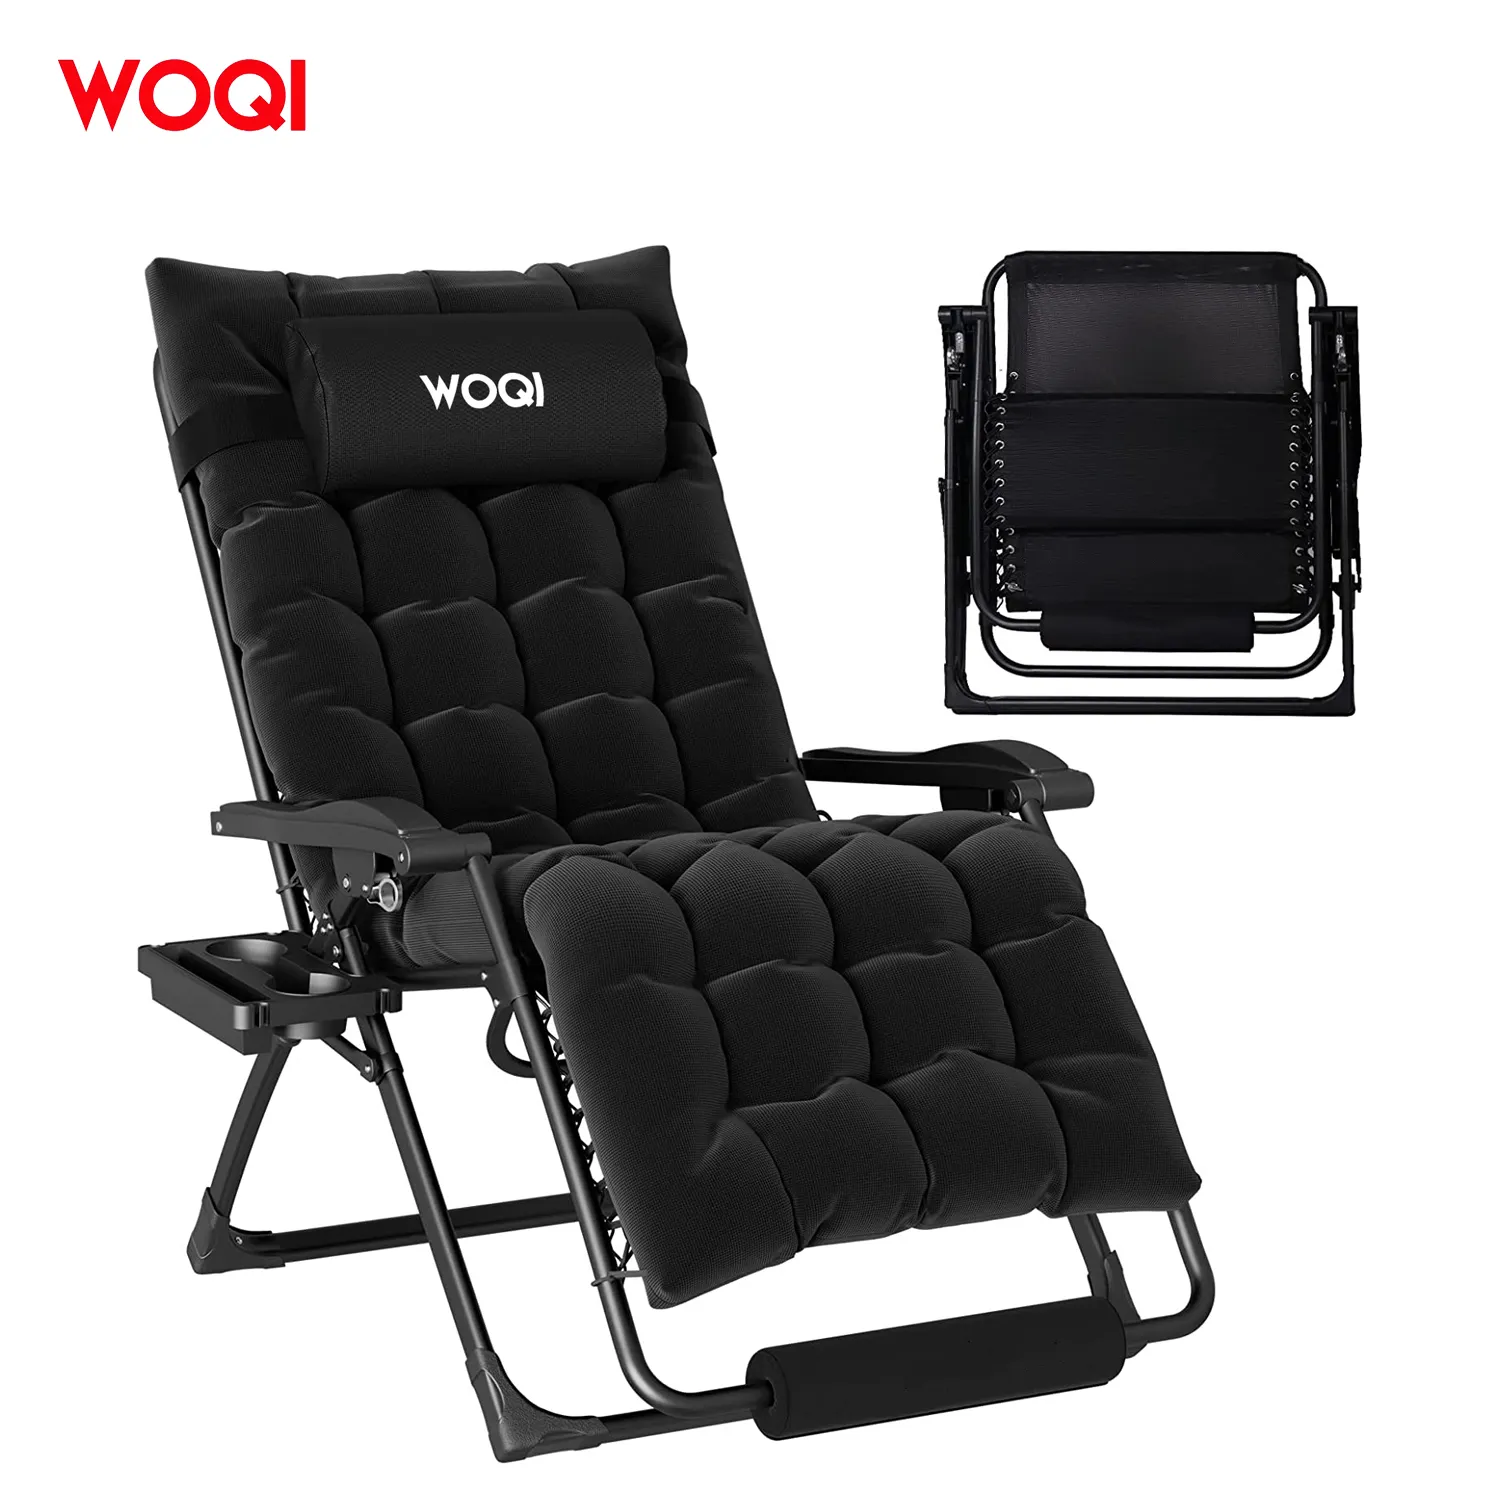 WOQI Zero Gravity Lounge Chairs Recliner Outdoor Beach Patio Garden Folding Chair with head cushion